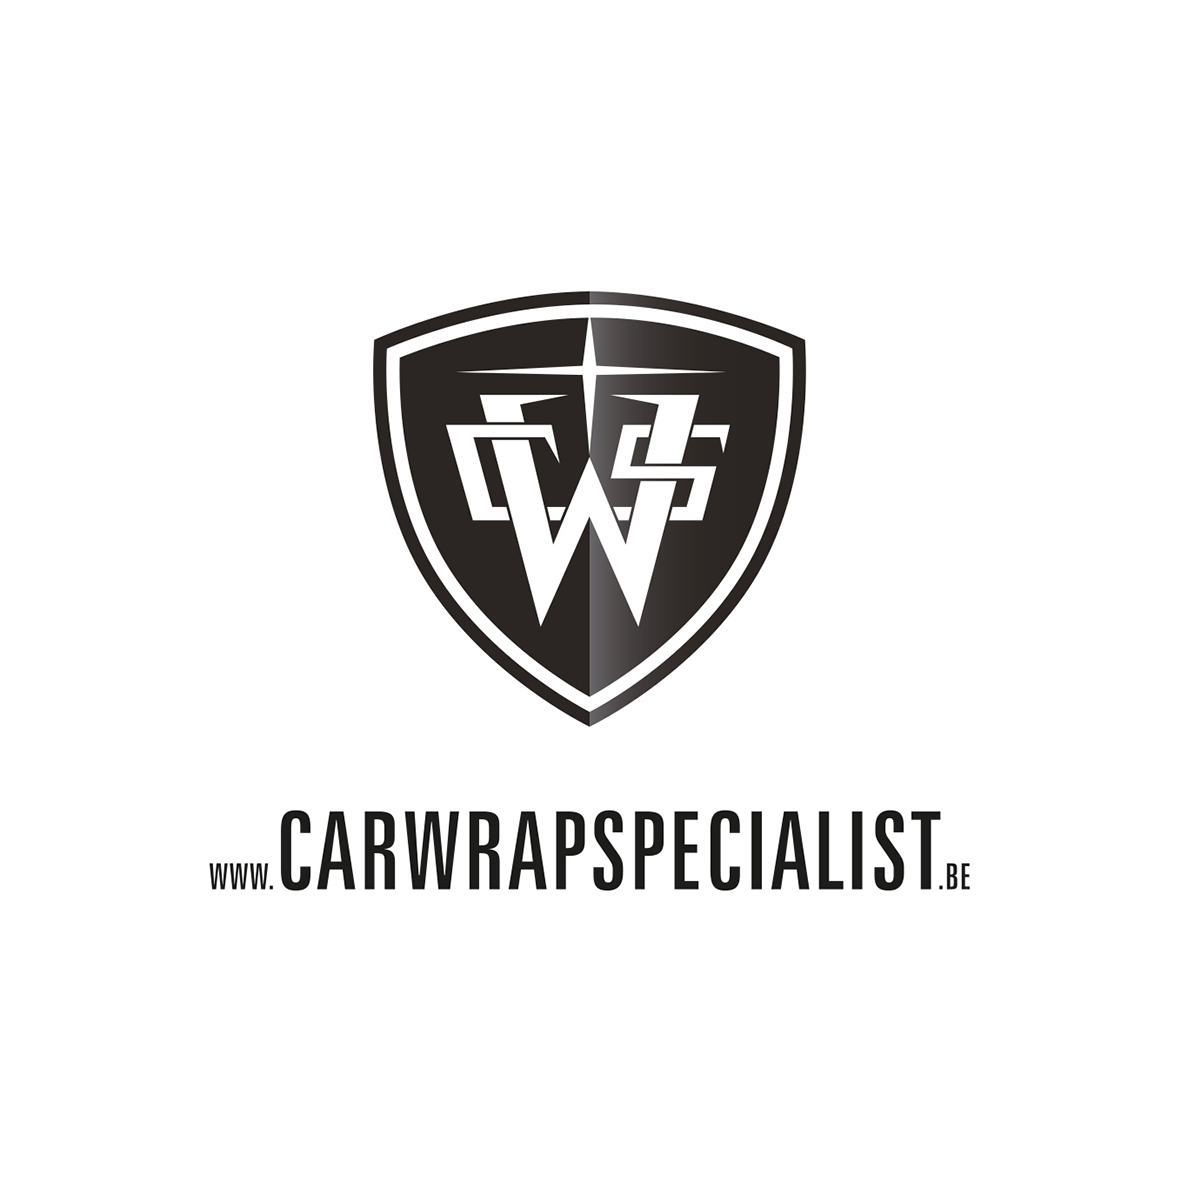 Carwrapspecialist